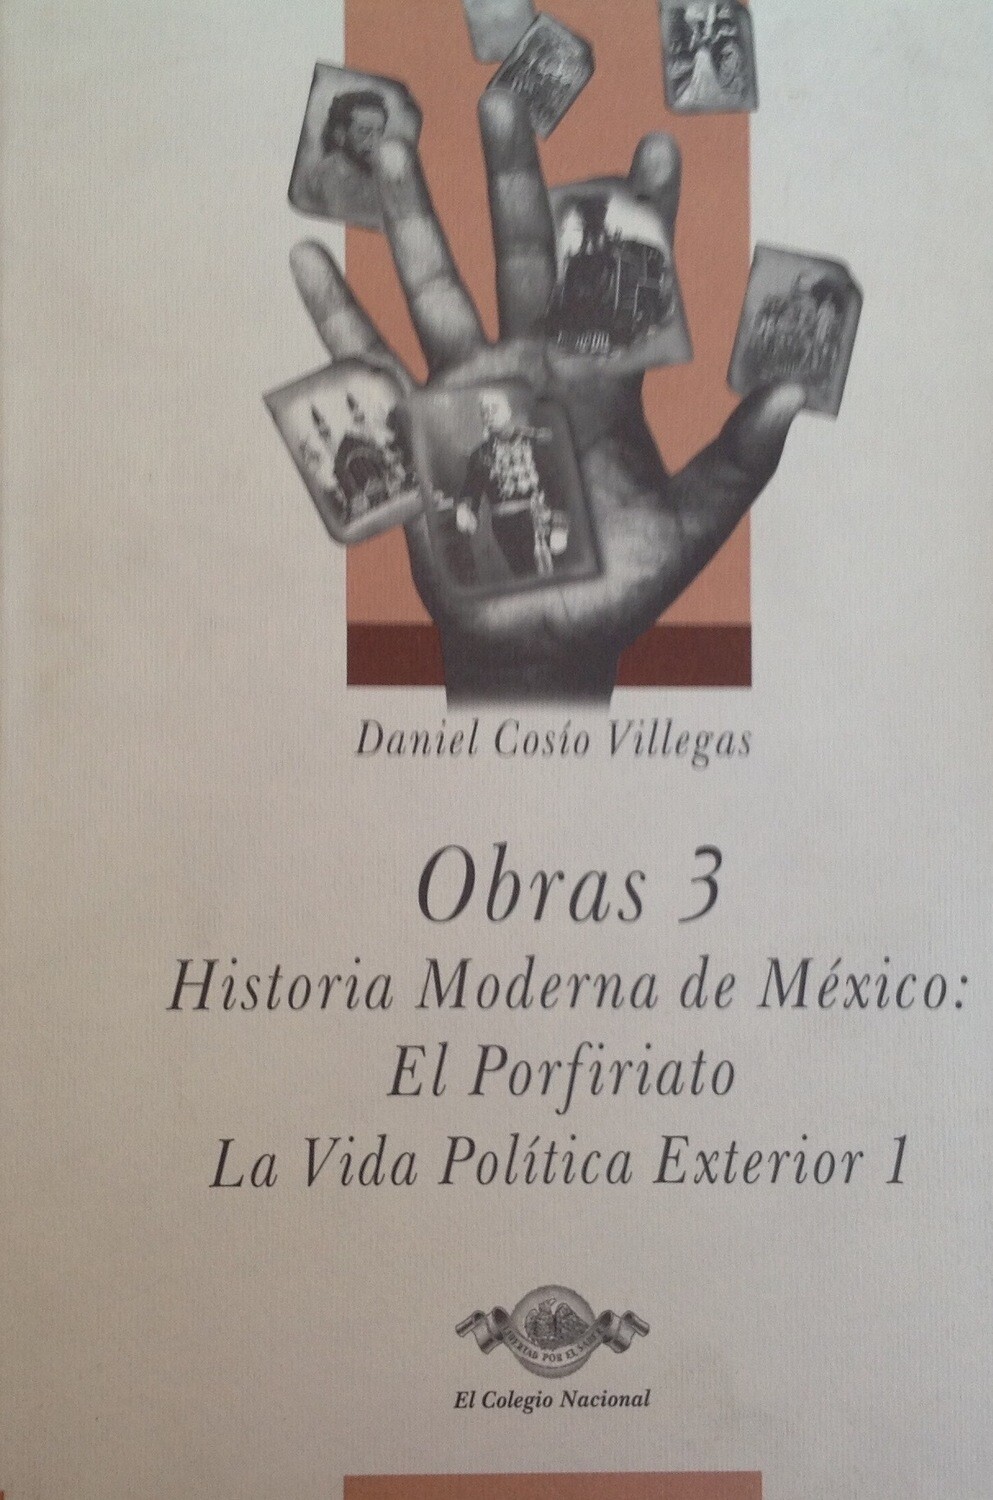 Daniel Cosío Villegas, Obras 3